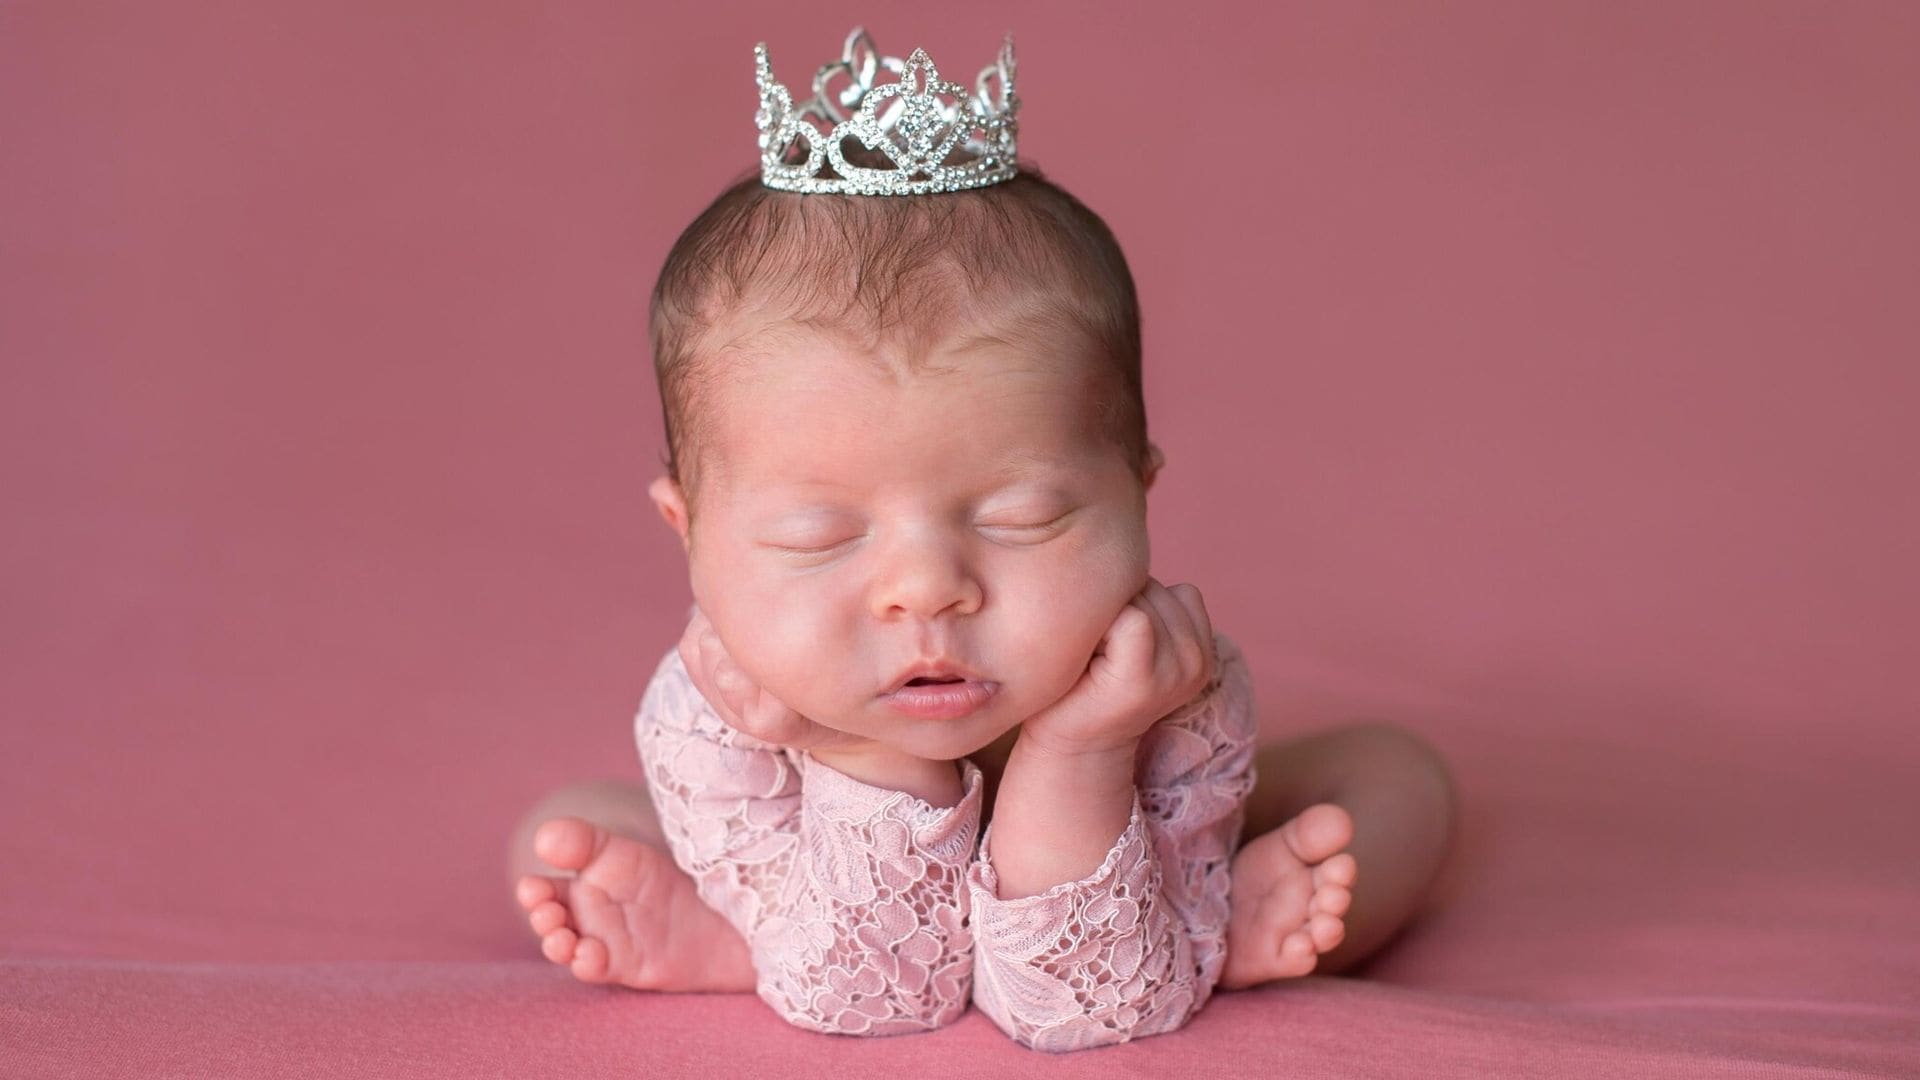 sleeping newborn baby girl wearing a tiara